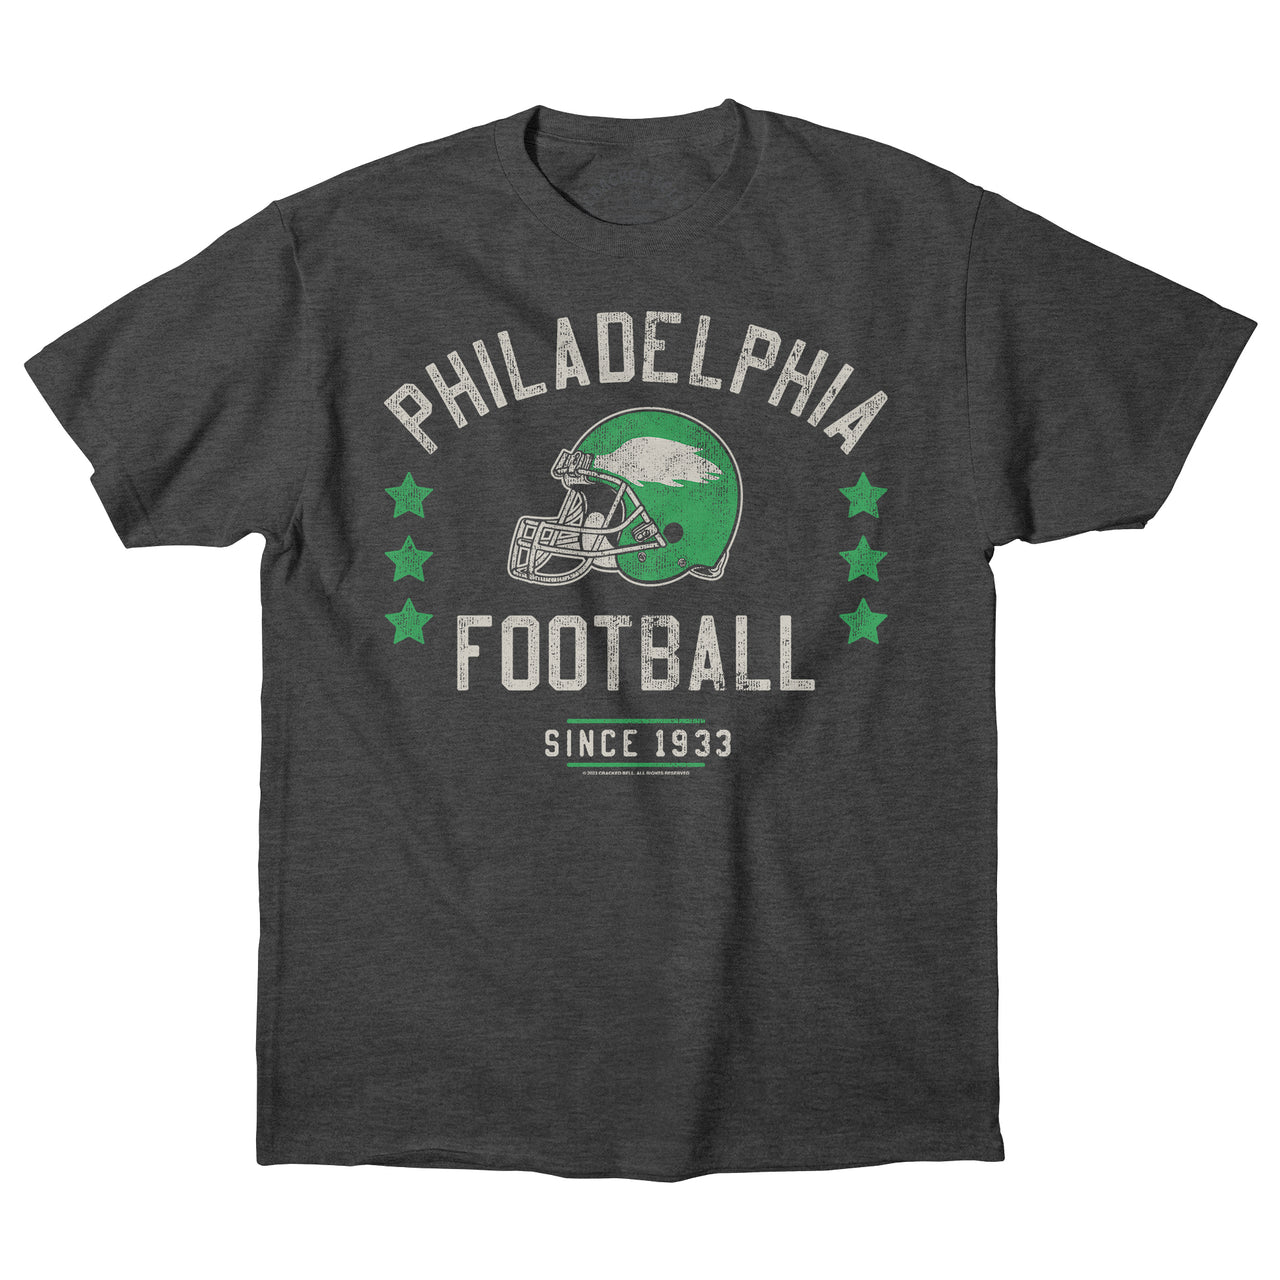 "Philadelphia Football" Shirt